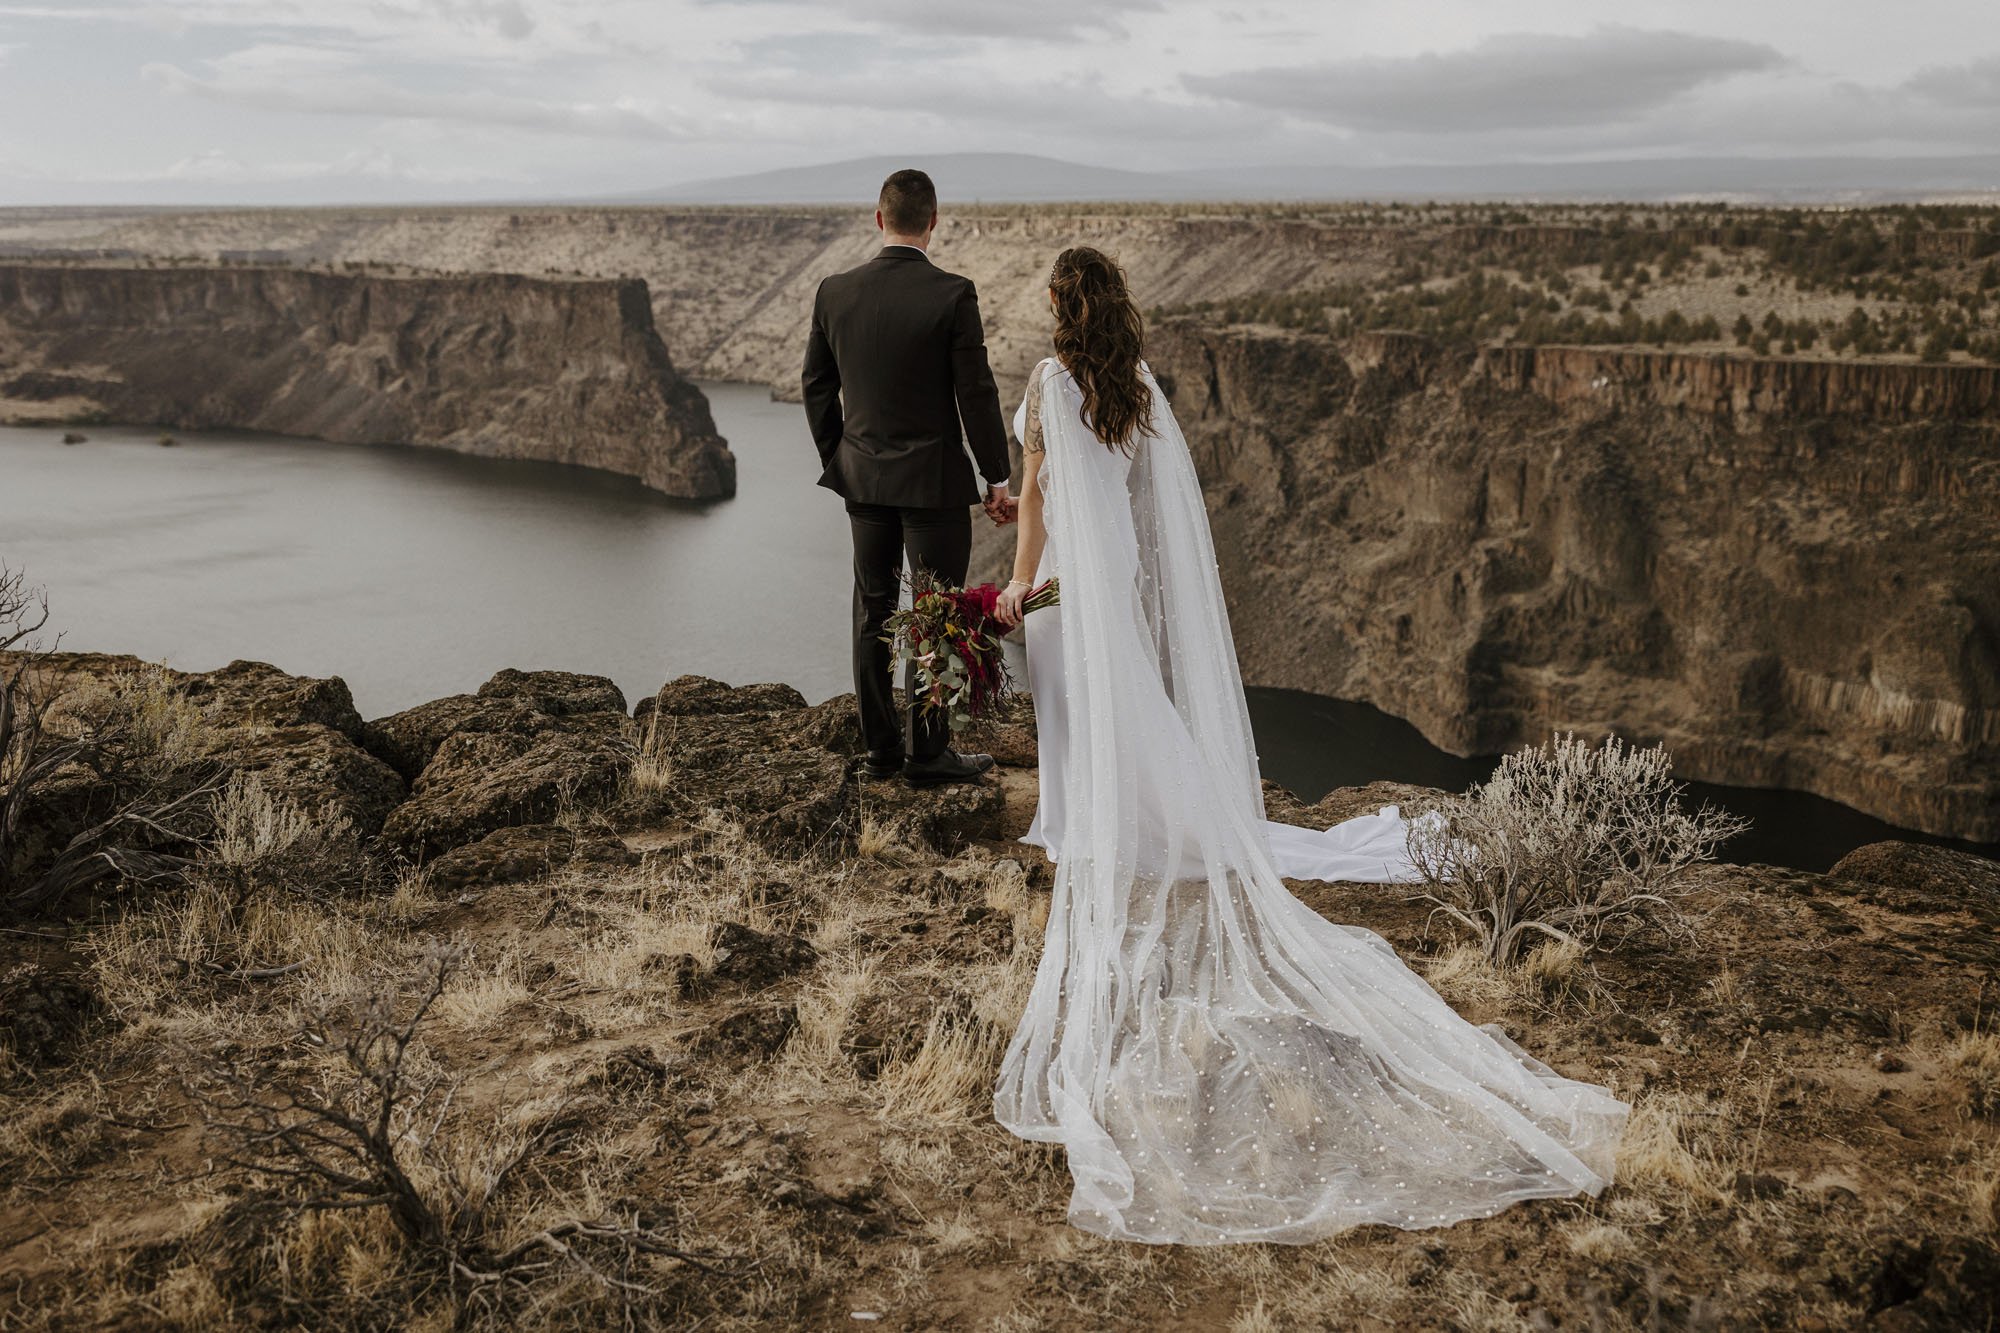 desert cliffside wedding ceremony in simple crepe alyssa kristin wedding dress